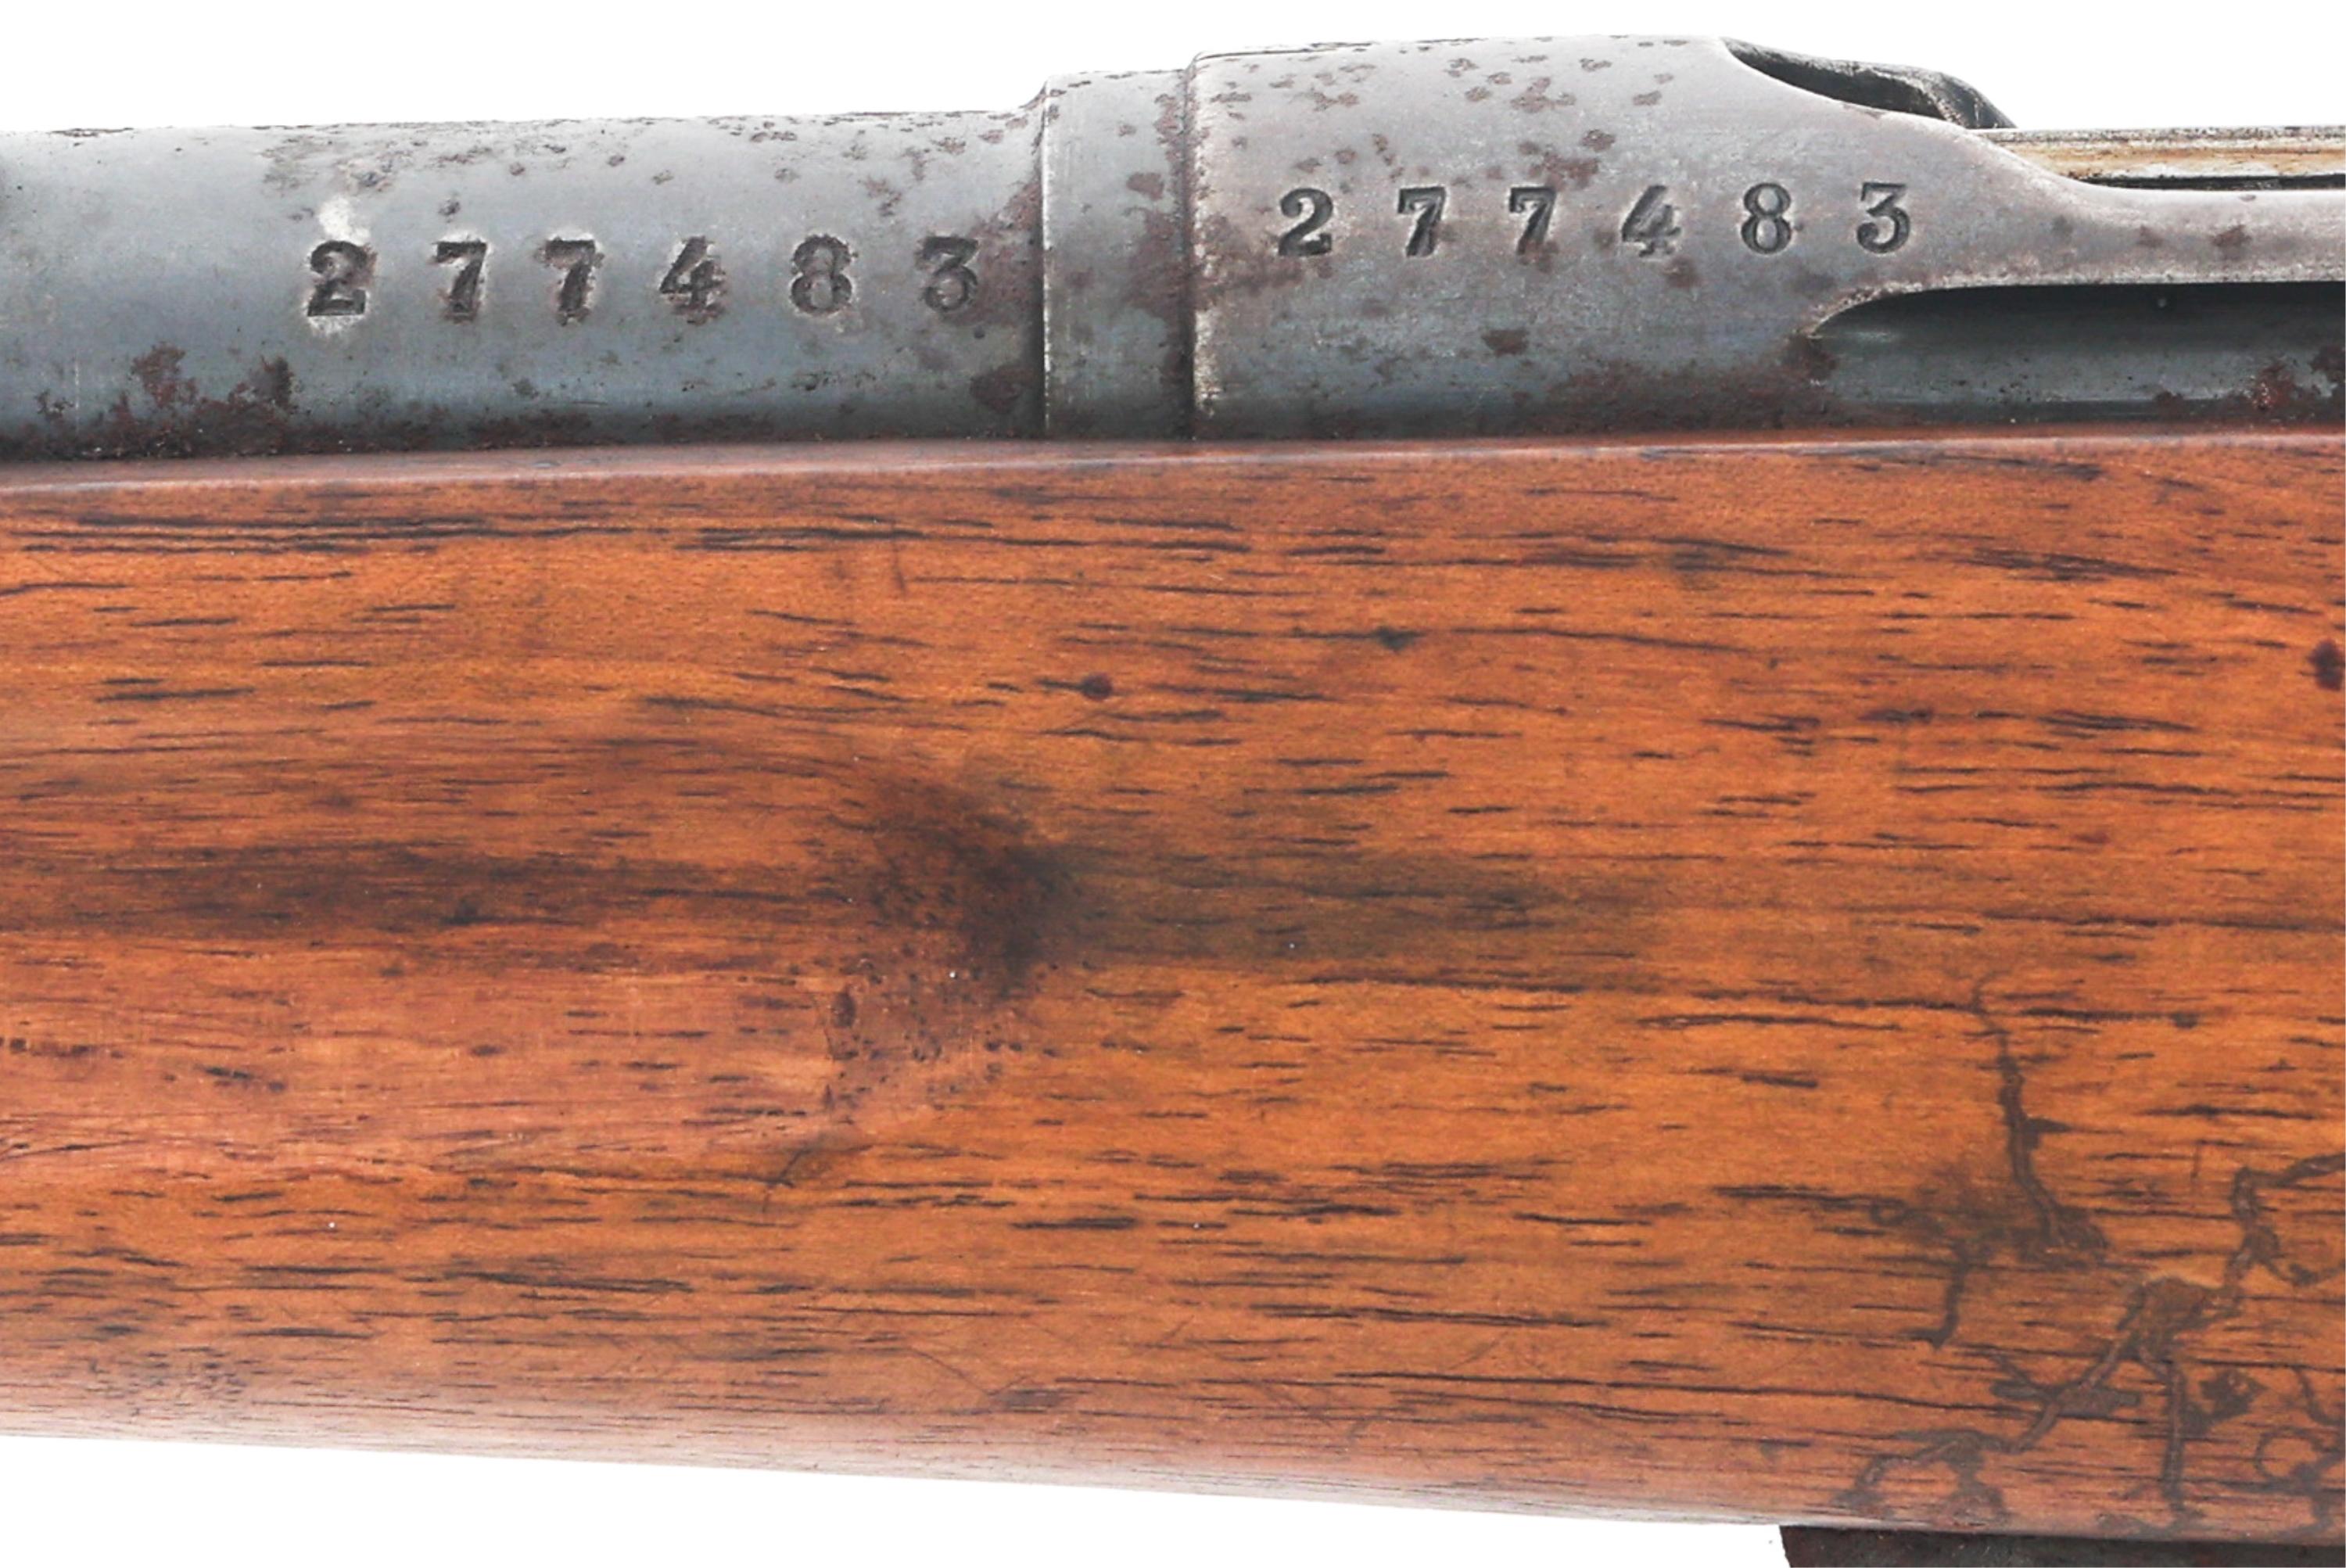 SWISS BERN MODEL 1896/11 7.5mm CAL RIFLE